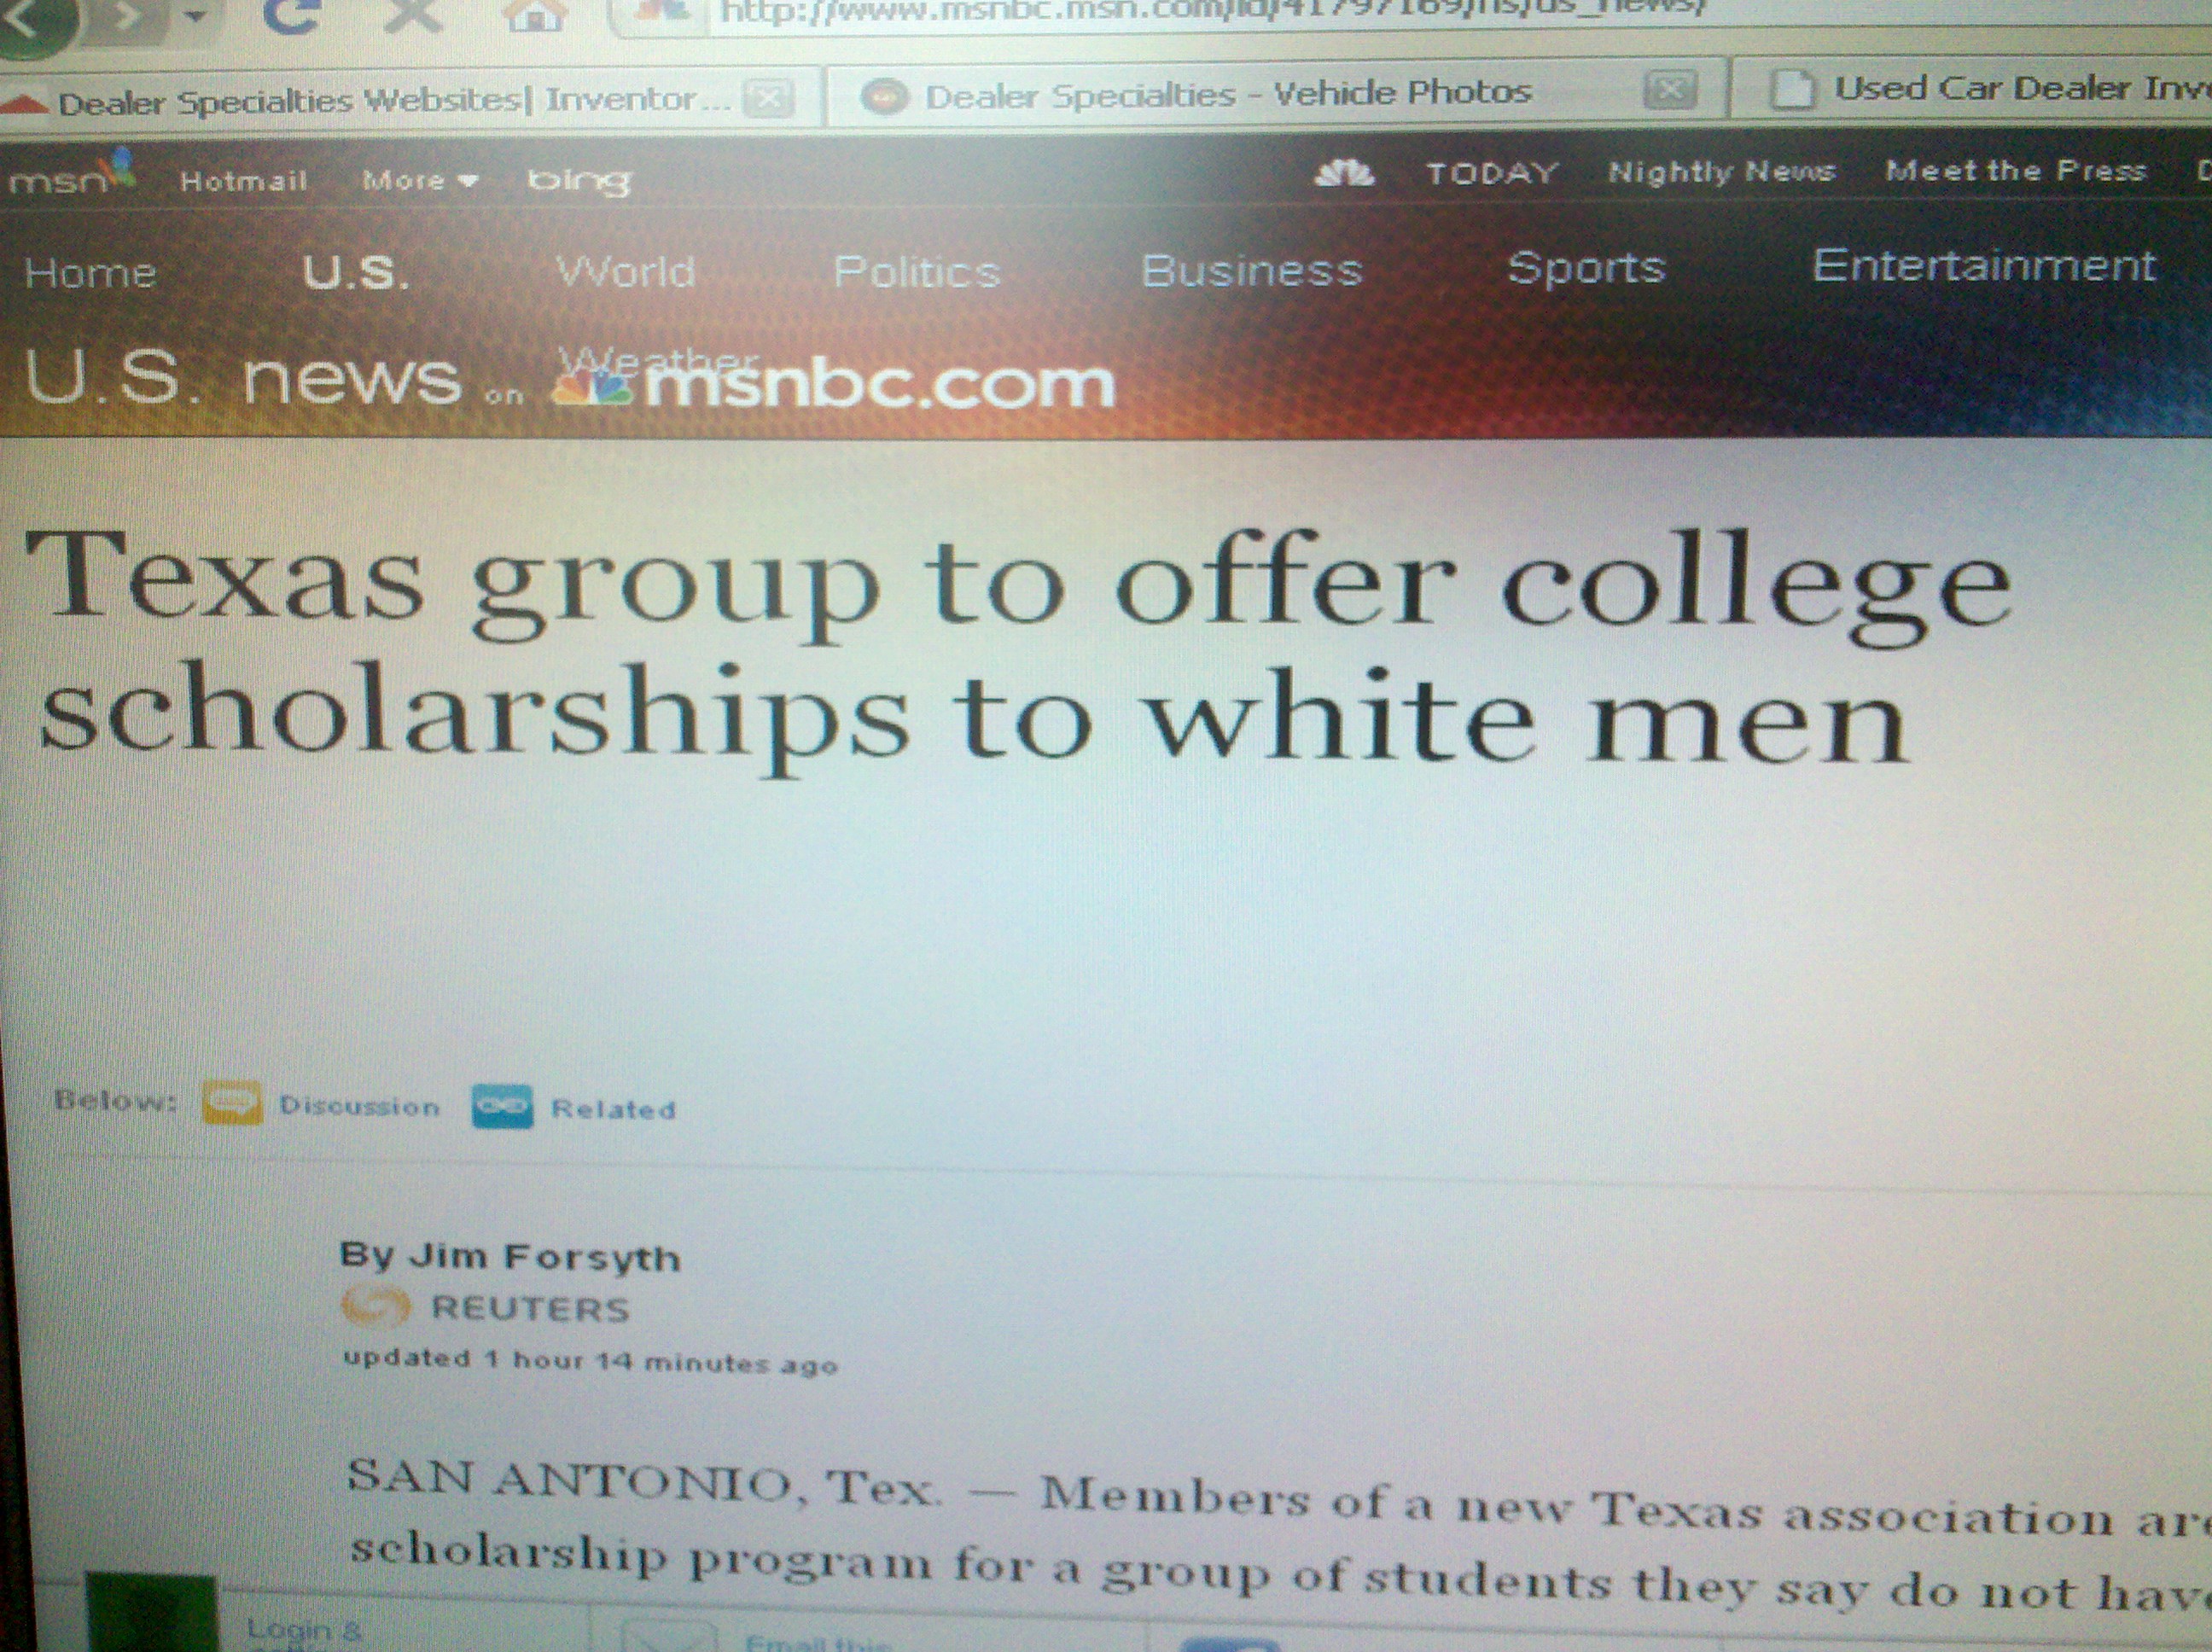 White Male Scholarship! http://www.msnbc.msn.com/id/41797169/ns/us_news/